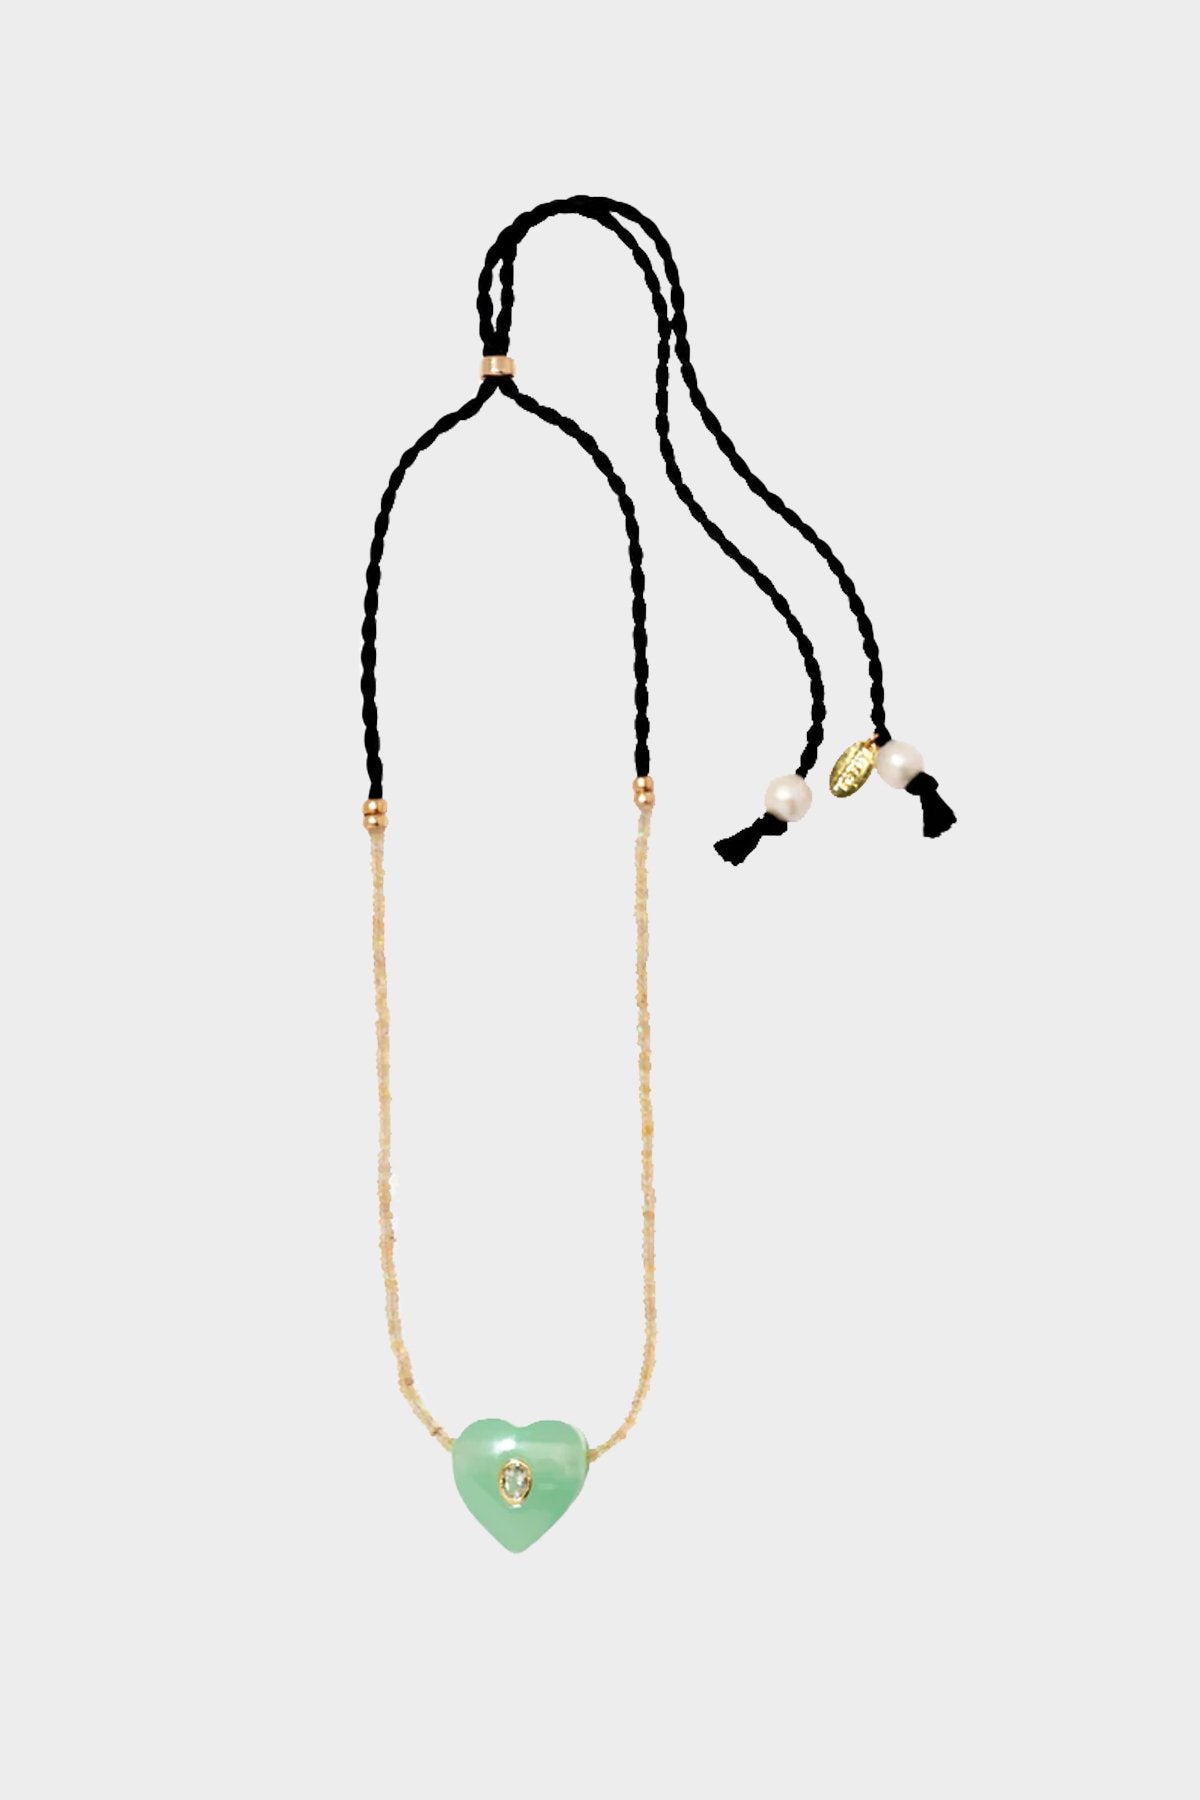 Gemini Necklace in Mint - shop-olivia.com